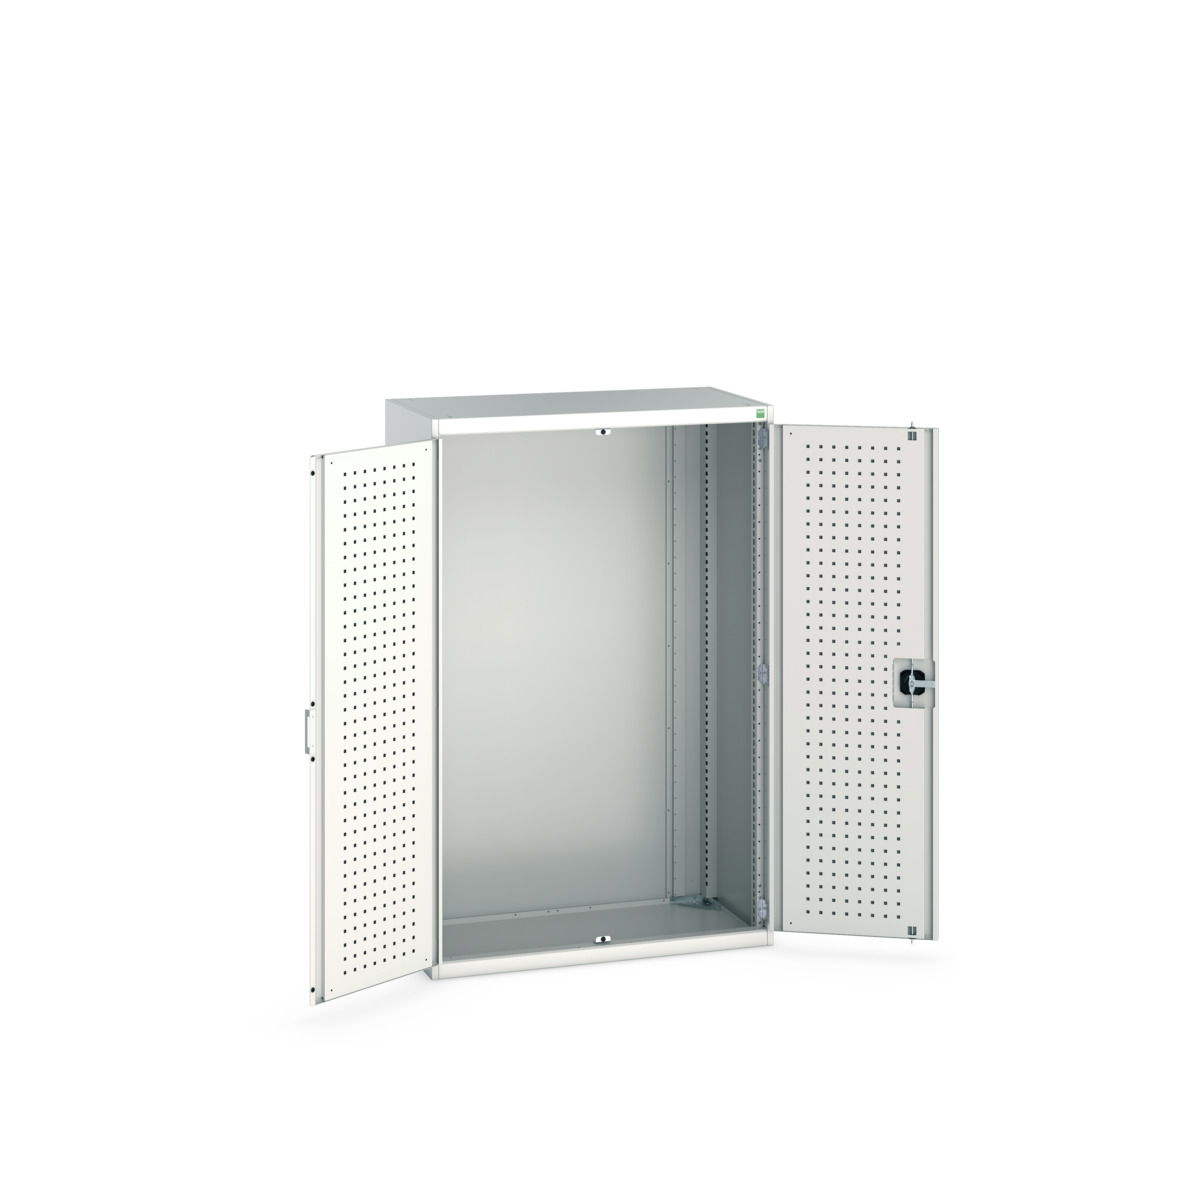 40013017.16V - cubio armoire SMLF-10516-1